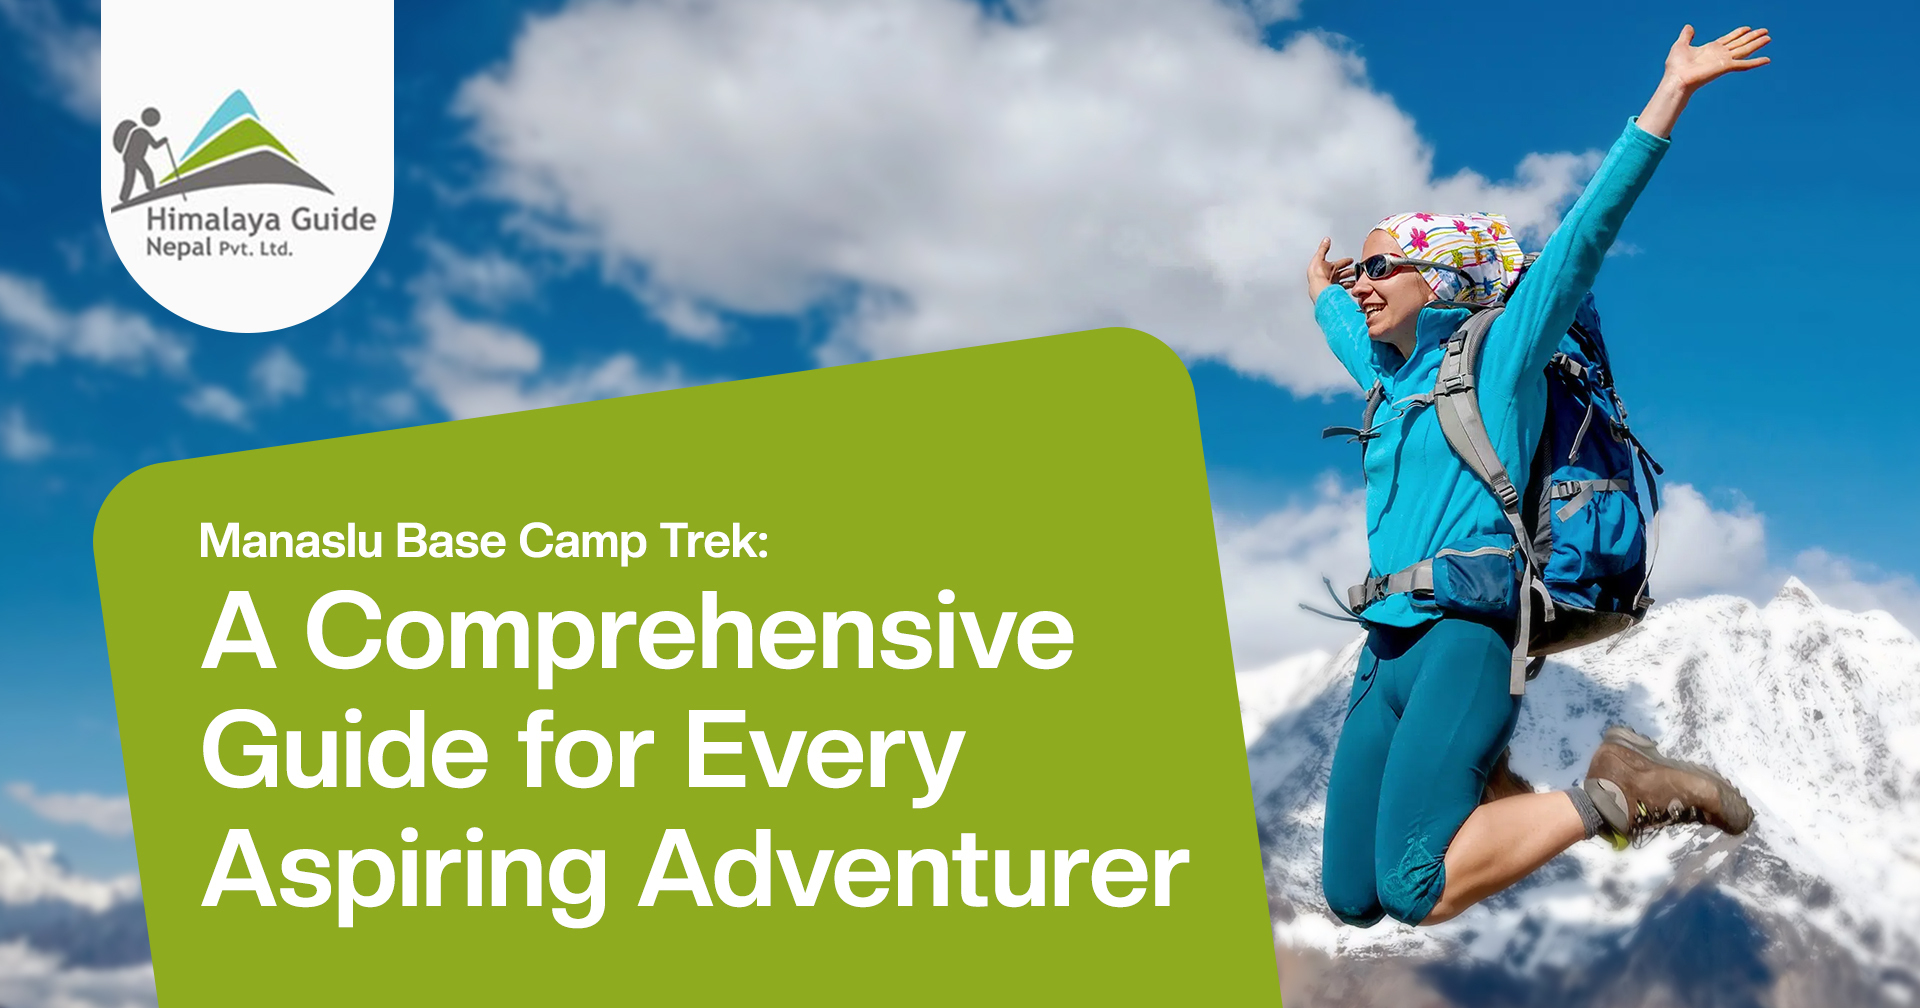 Manaslu Base Camp Trek: A Comprehensive Guide for Every Aspiring Adventurer